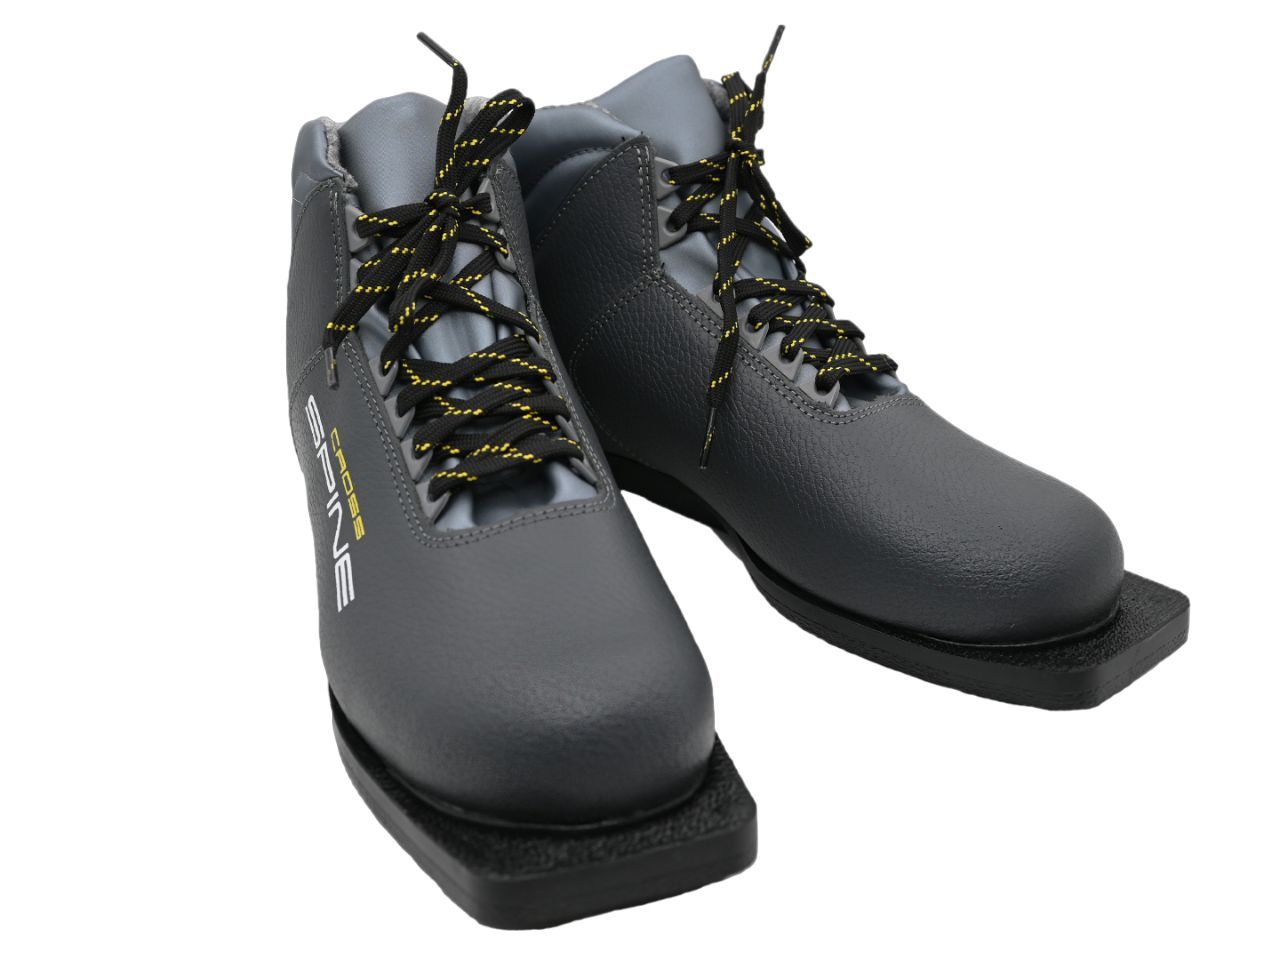 Лыжные ботинки SPINE 75 мм CROSS 35-7 кожаные размер 41